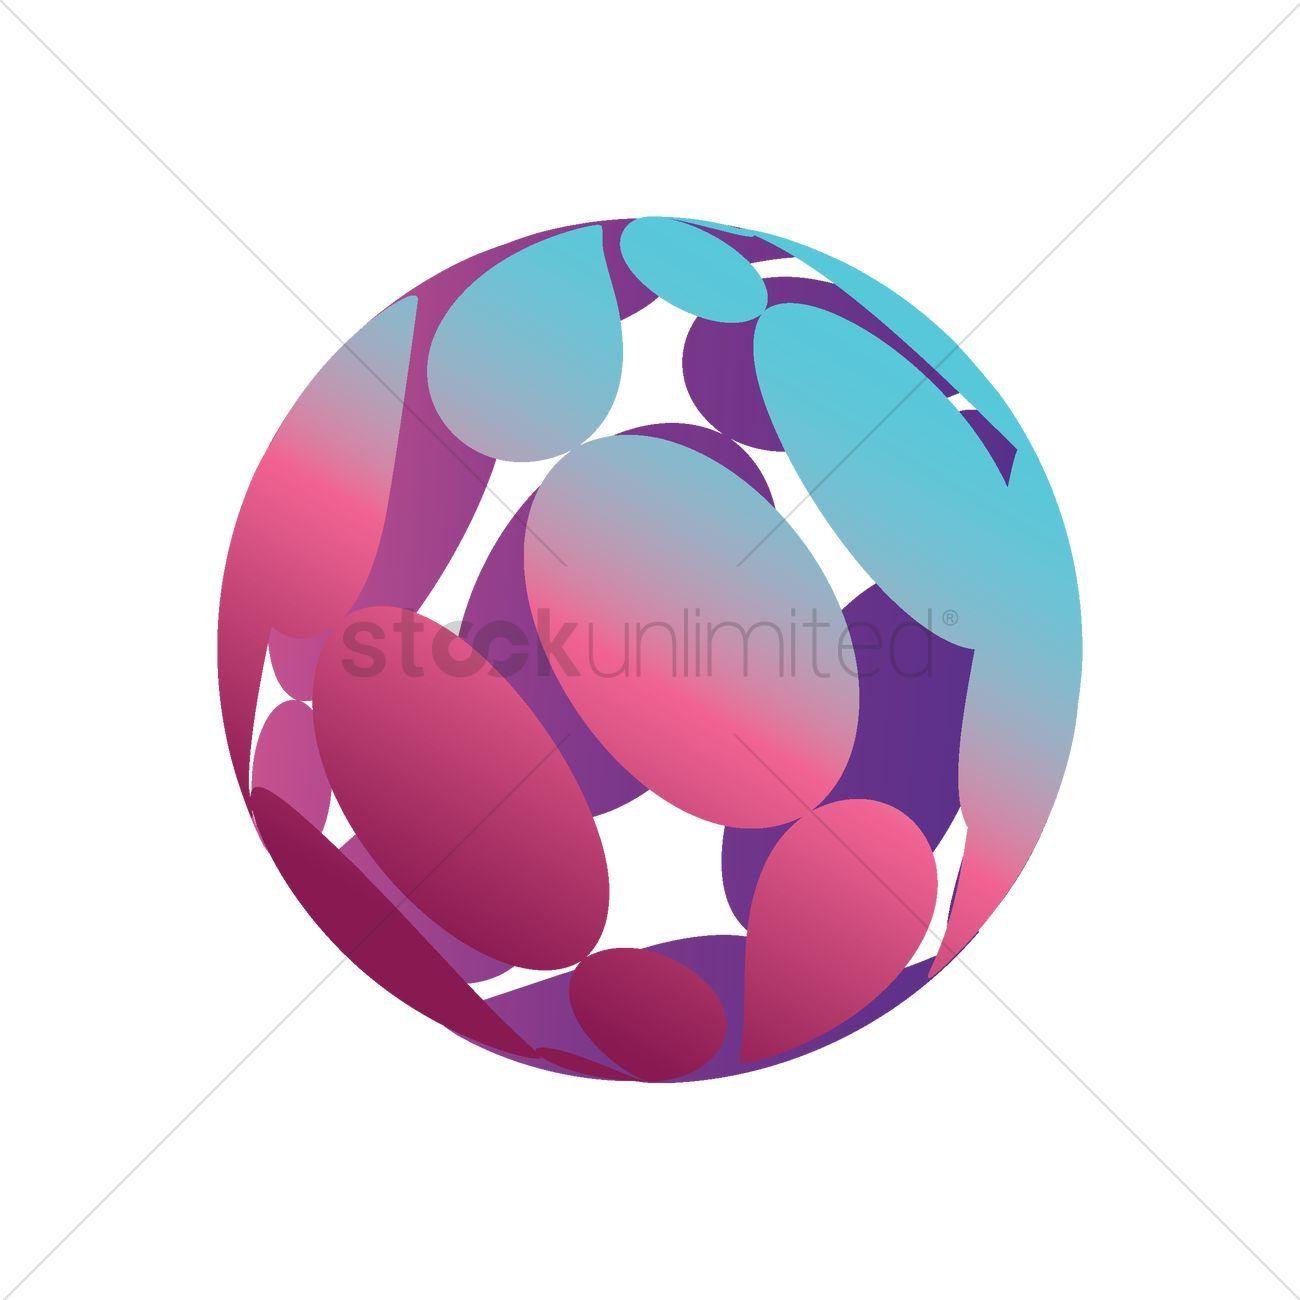 Oval Globe Logo - Globe logo element with oval shapes Vector Image